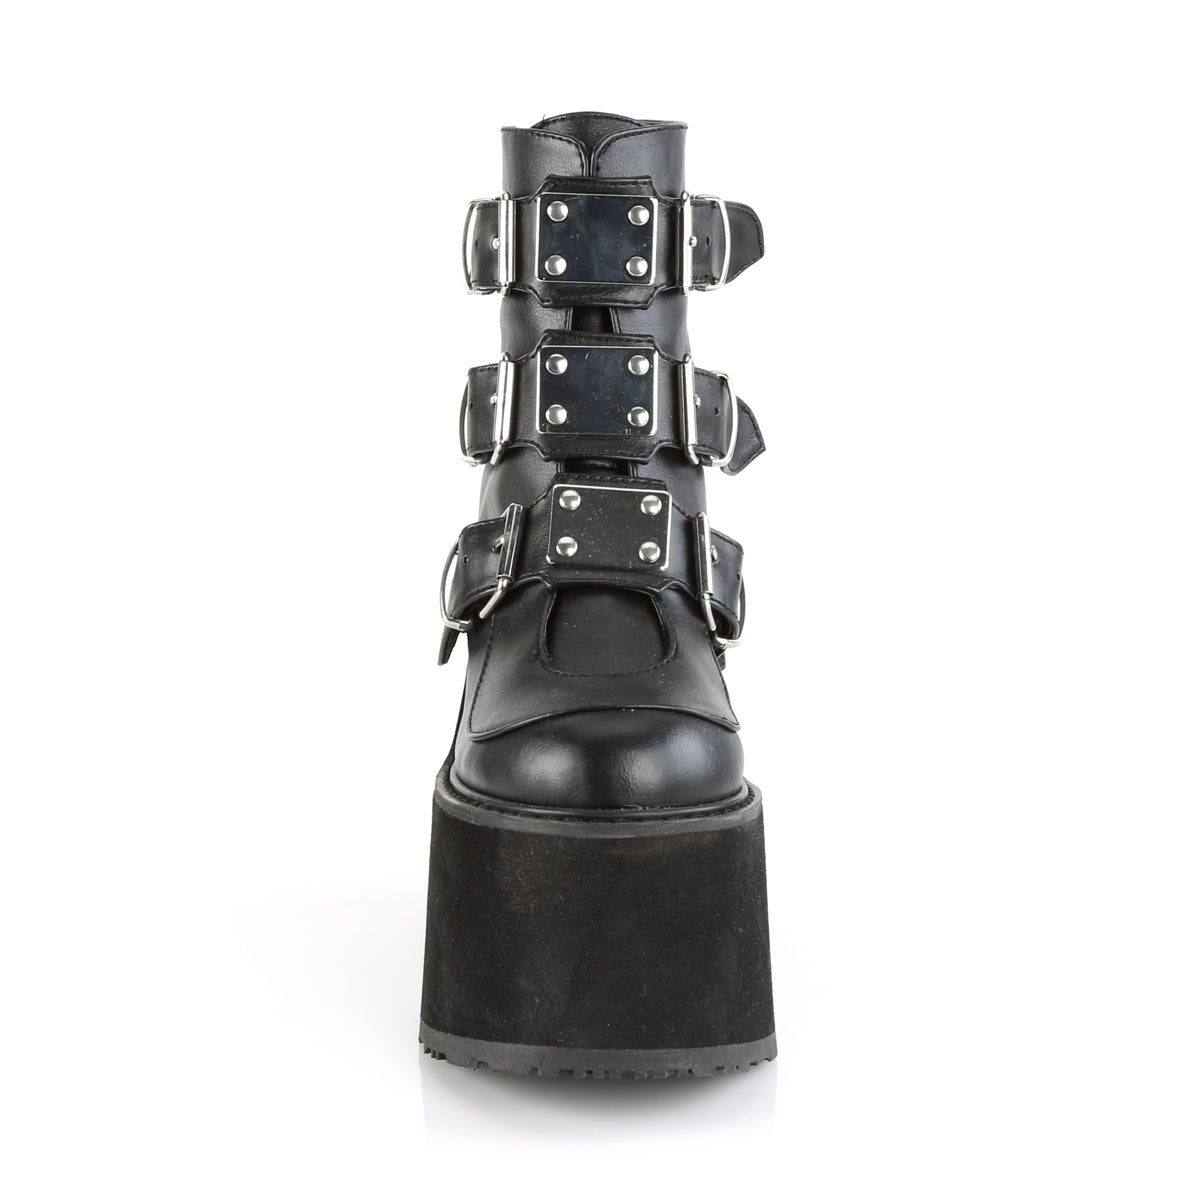 SWING-105 Black Vegan Leather Ankle Boot Demonia